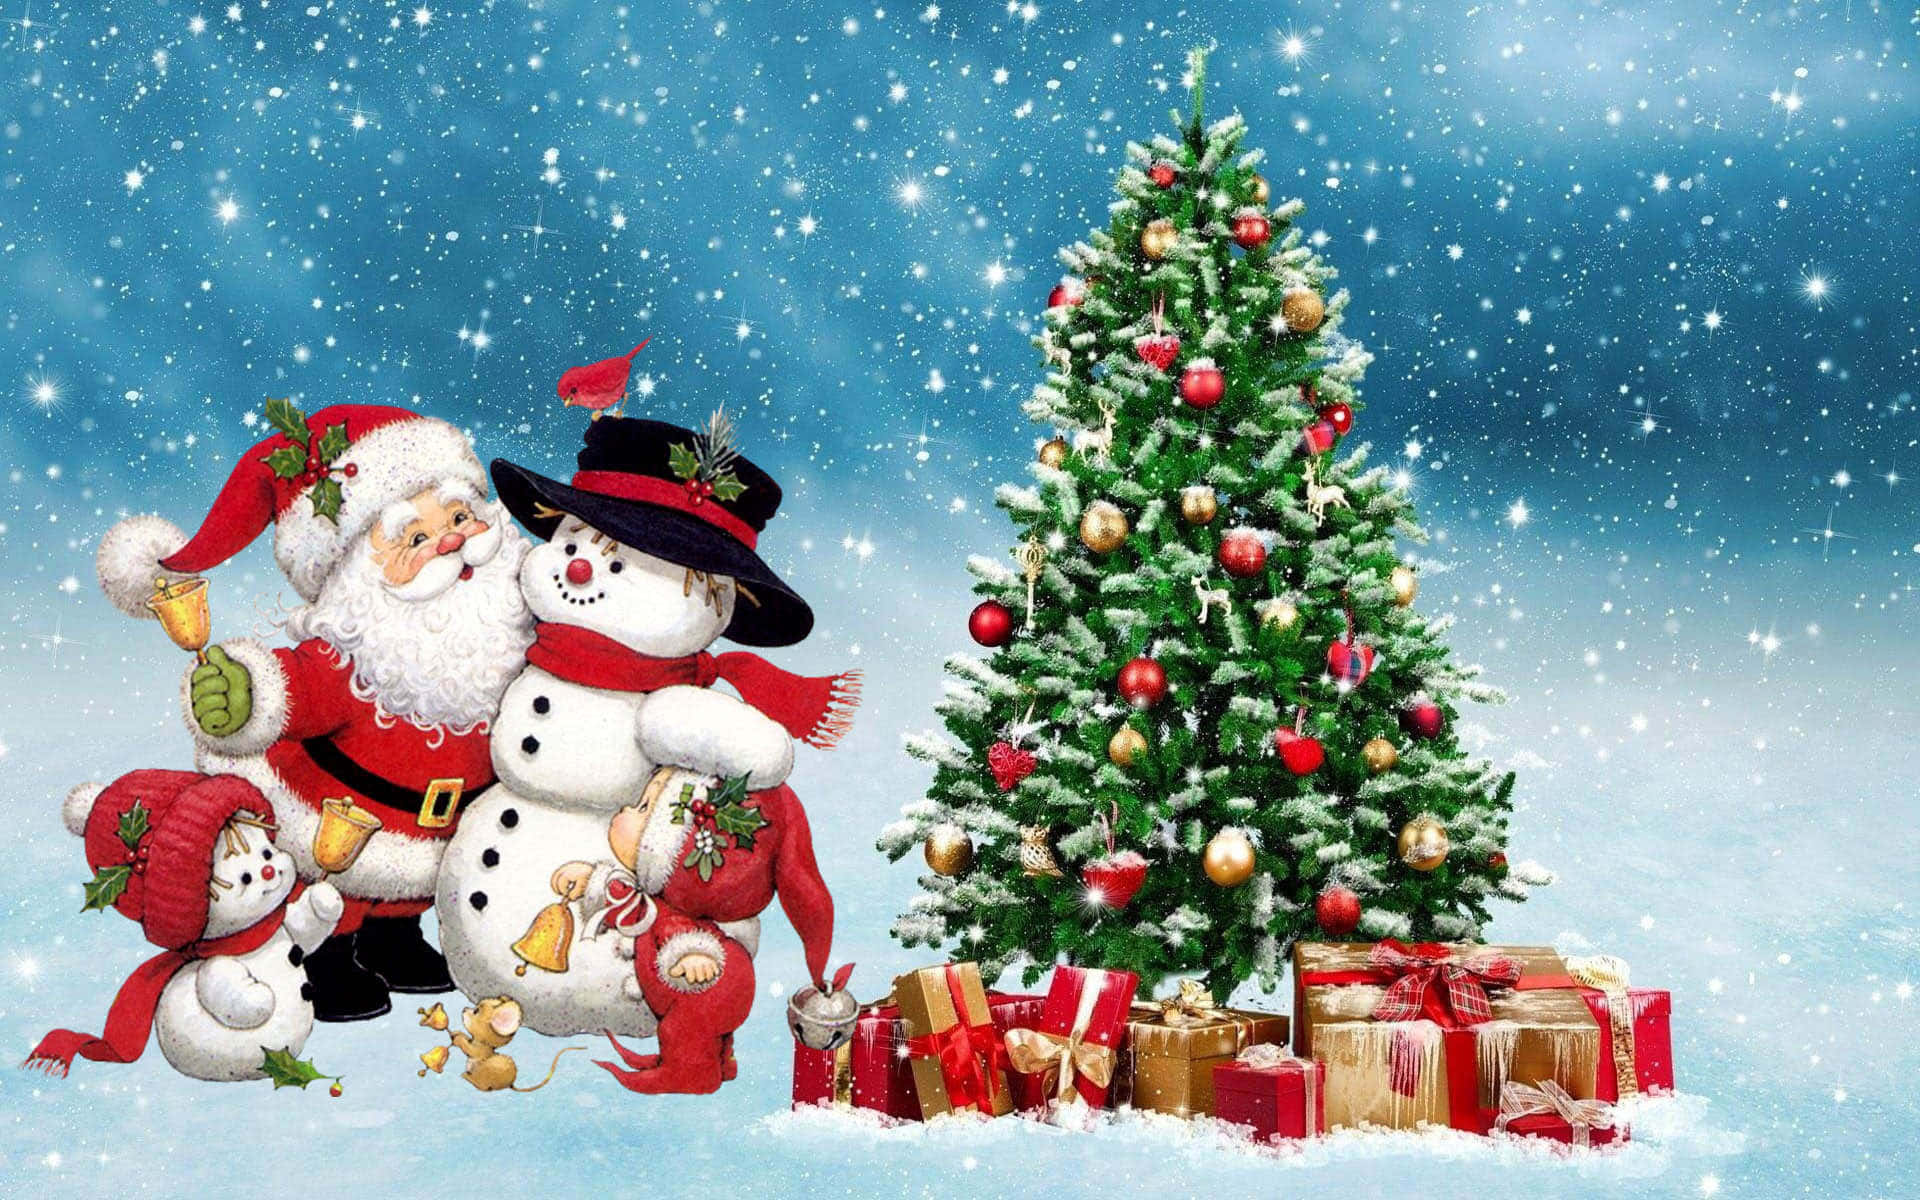 Celebrate Christmas with a beautiful and festive Christmas Tree